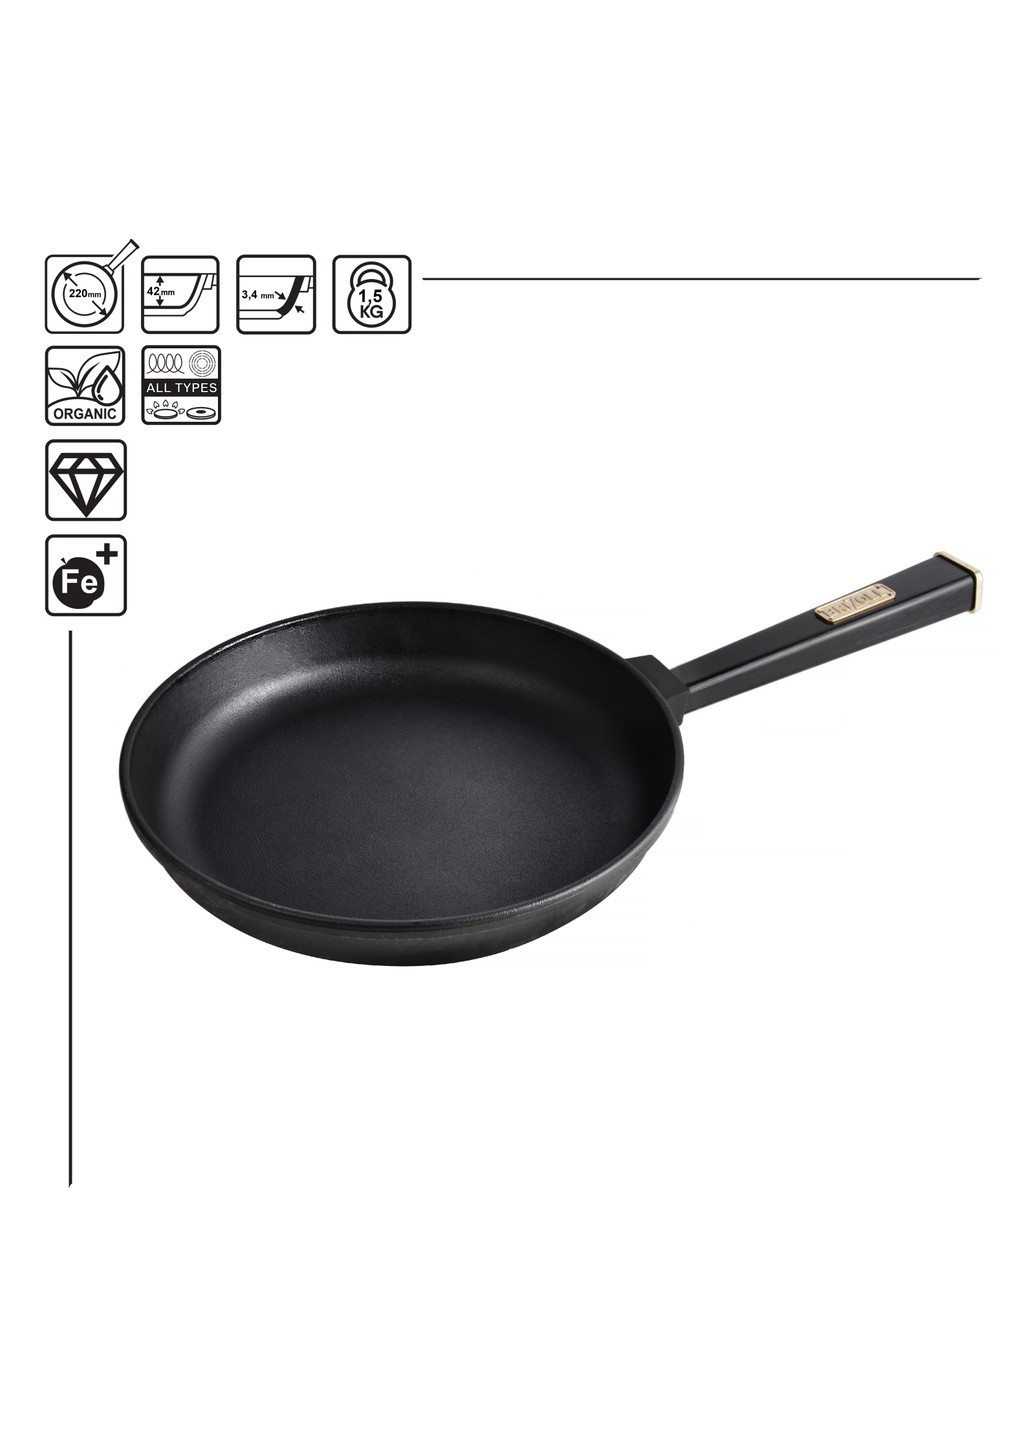 Чугунная сковорода Optima-Black 220 х 40 мм Brizoll (255190764)